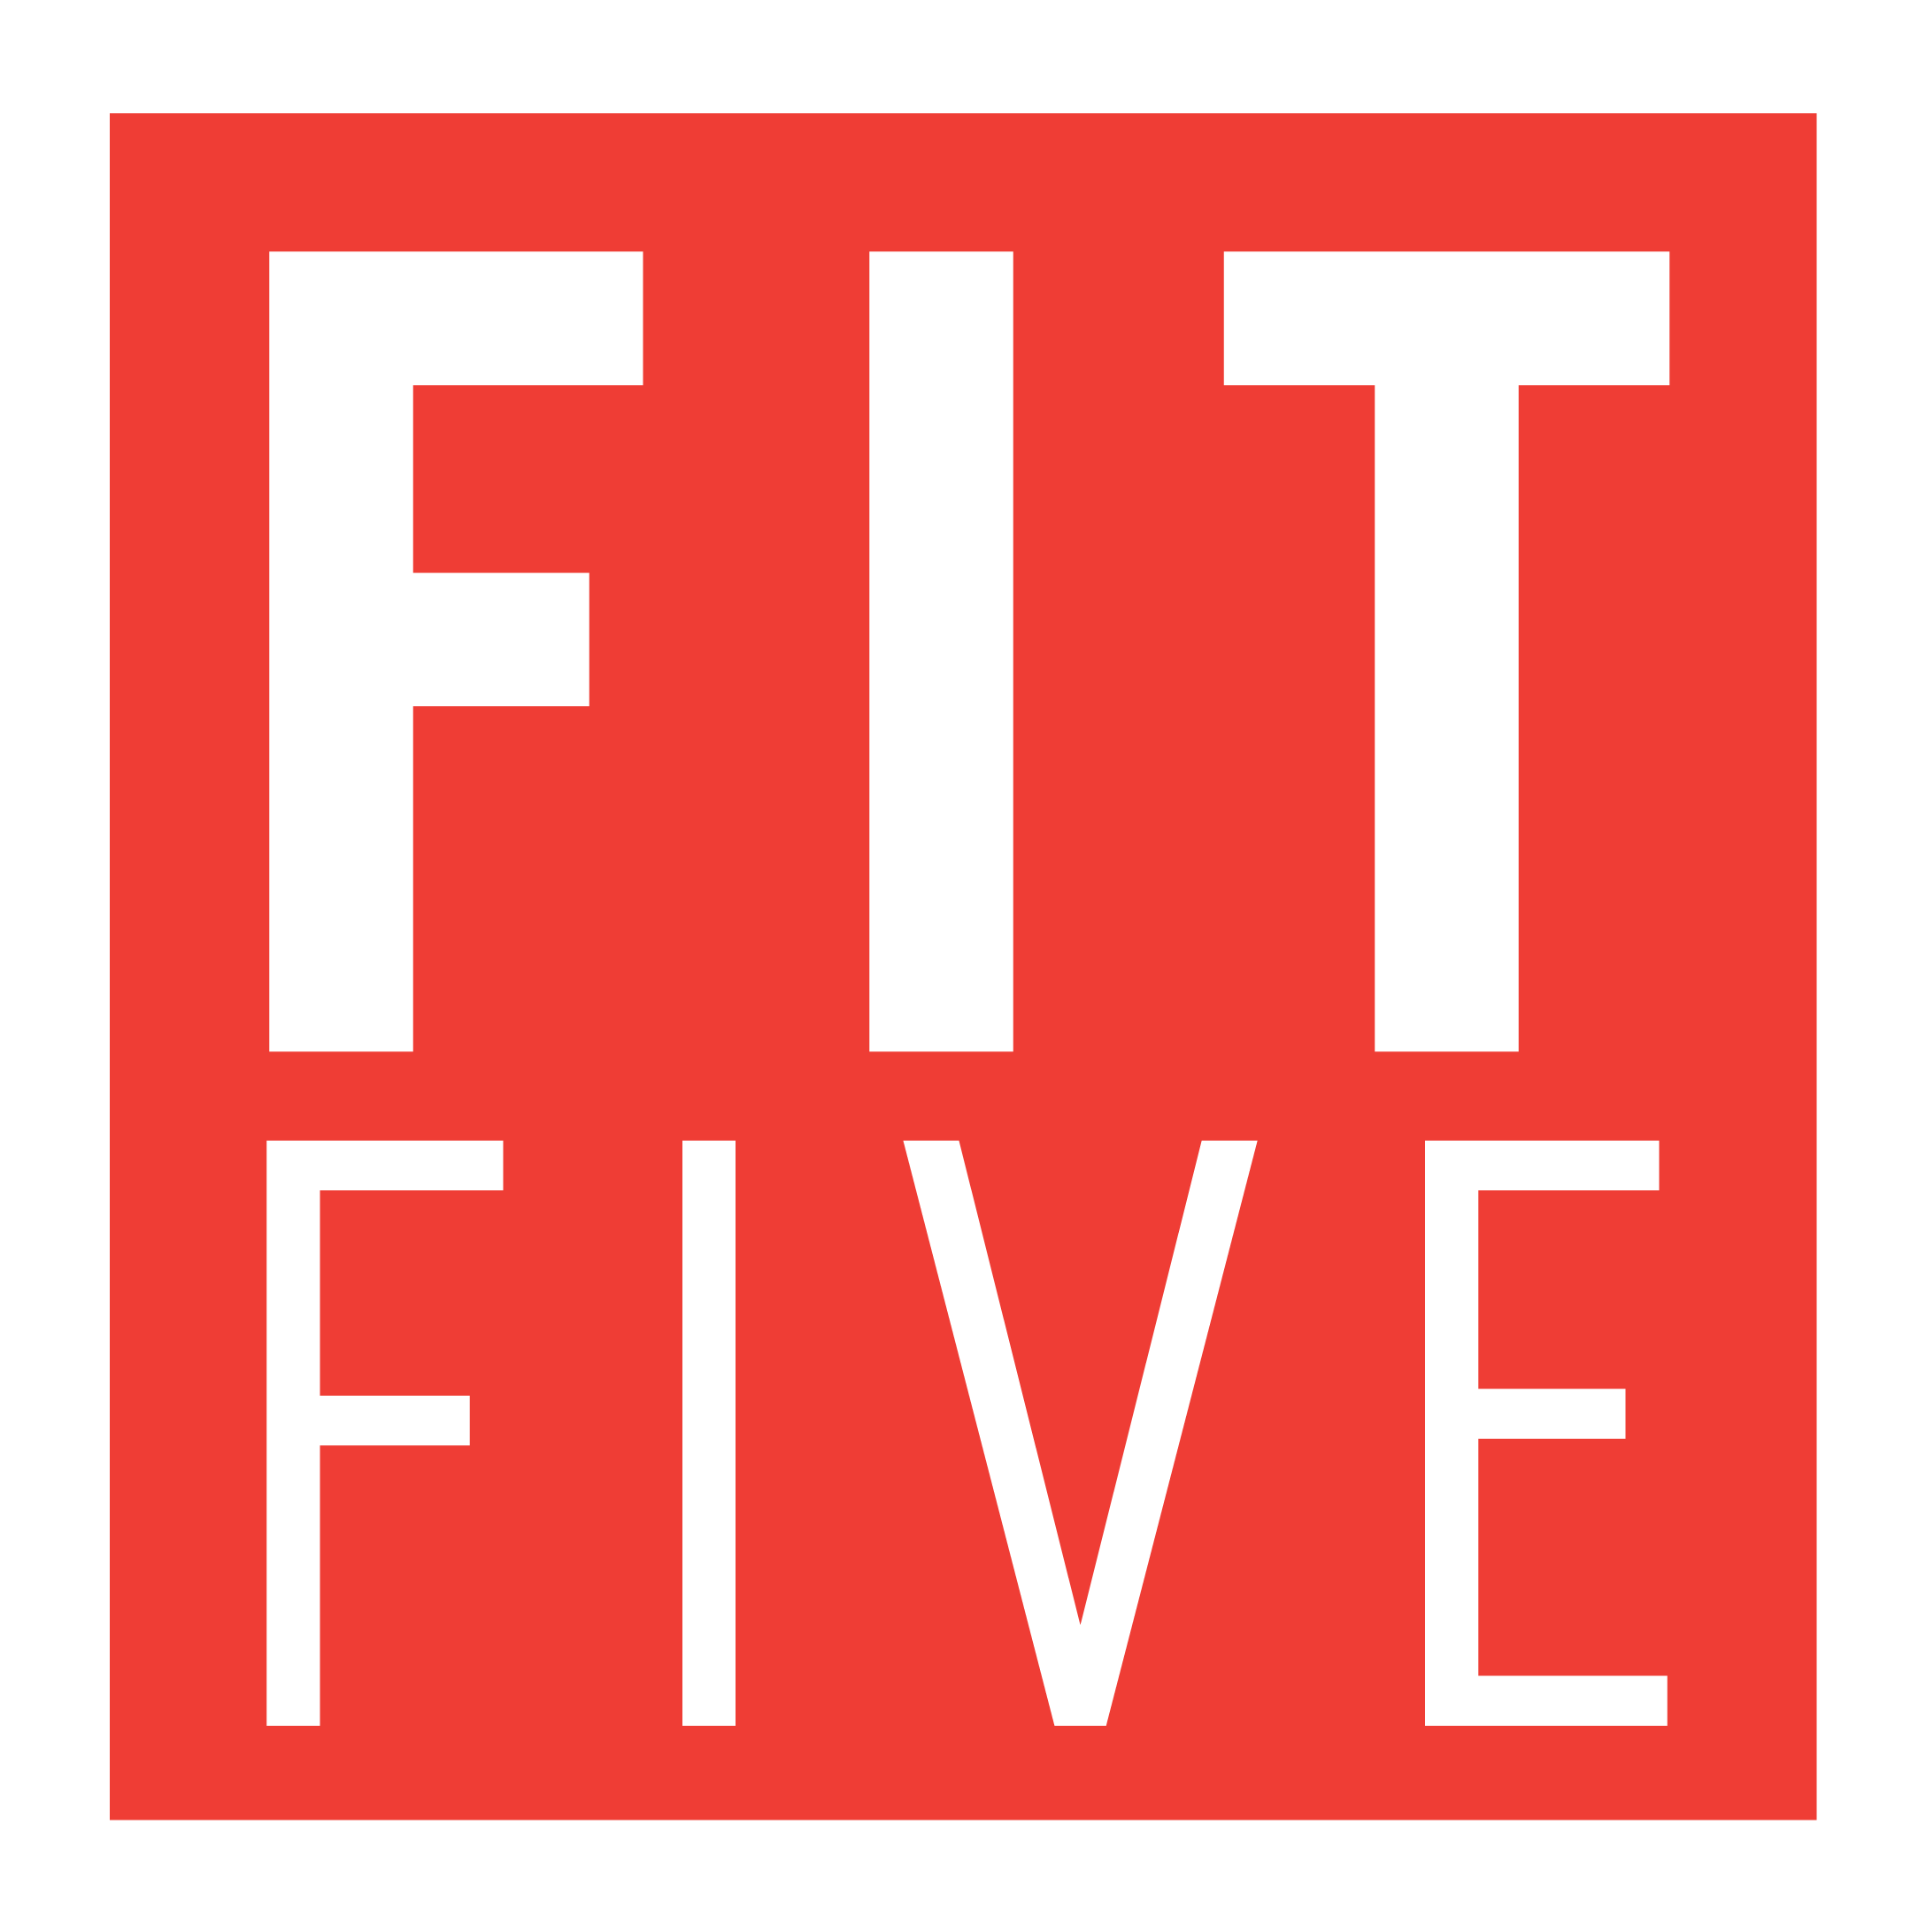 Fit Five Meals